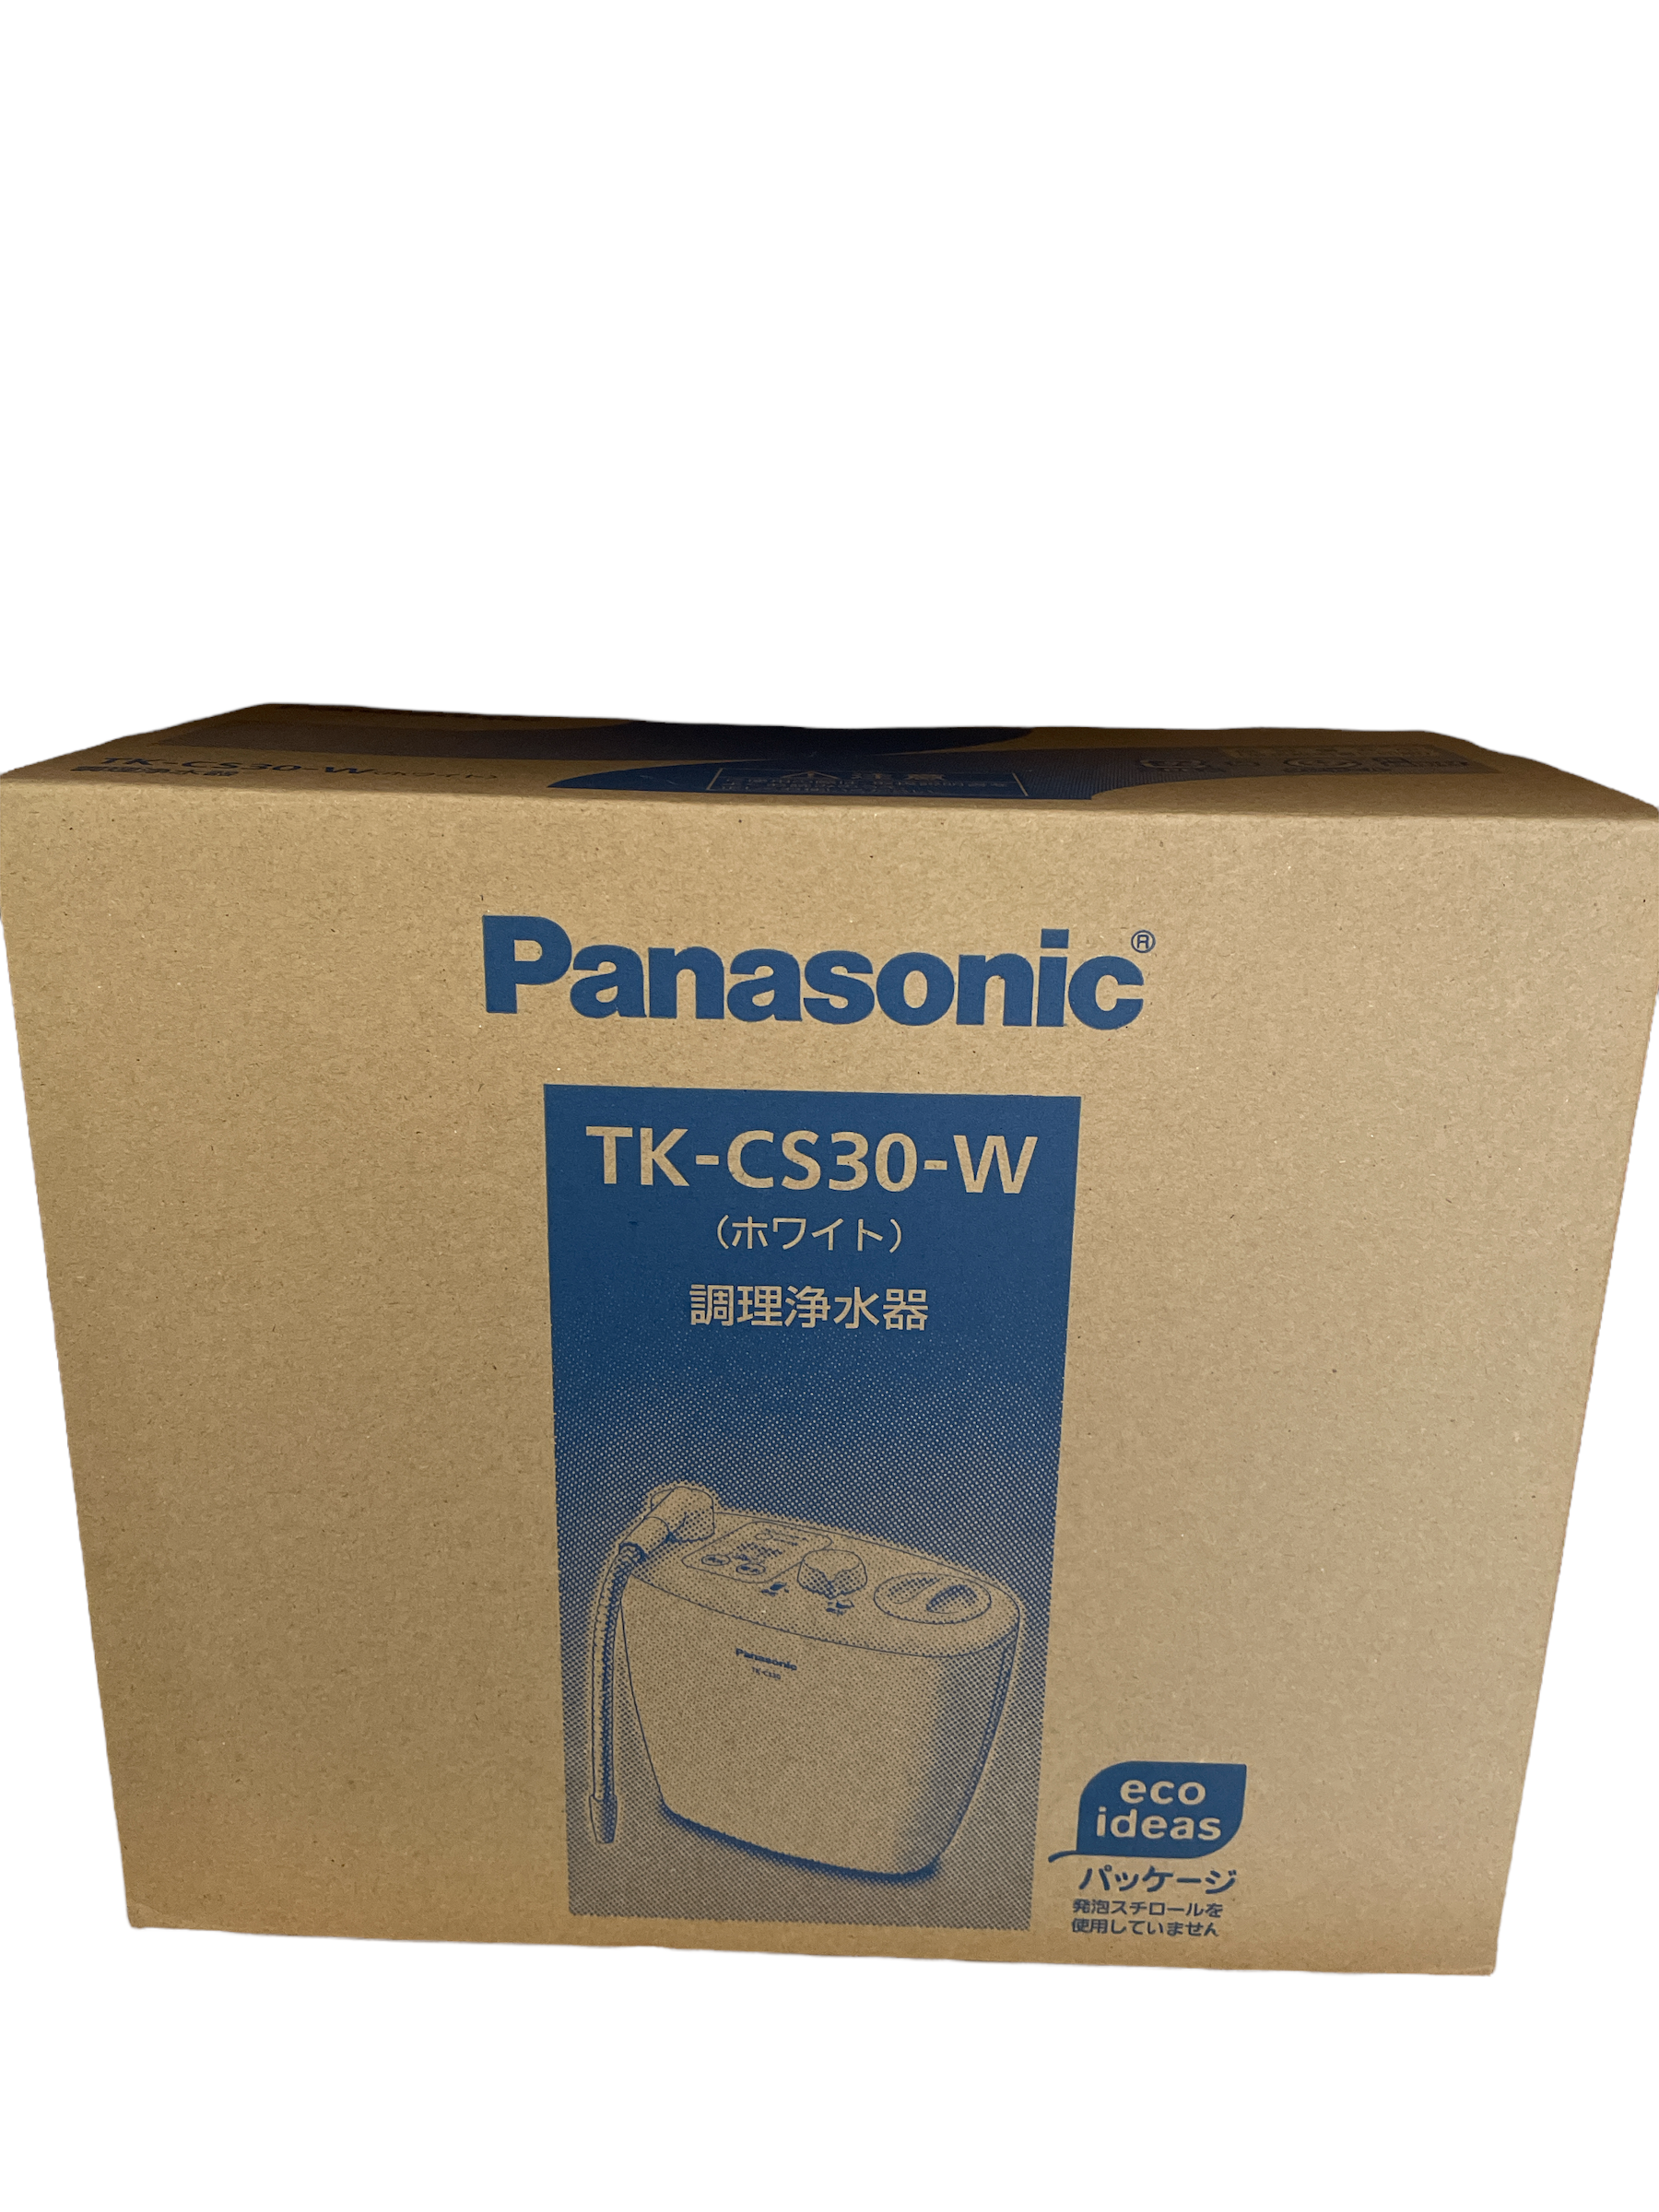 Panasonic Water Purifier TK-CS30-W 調理浄水器